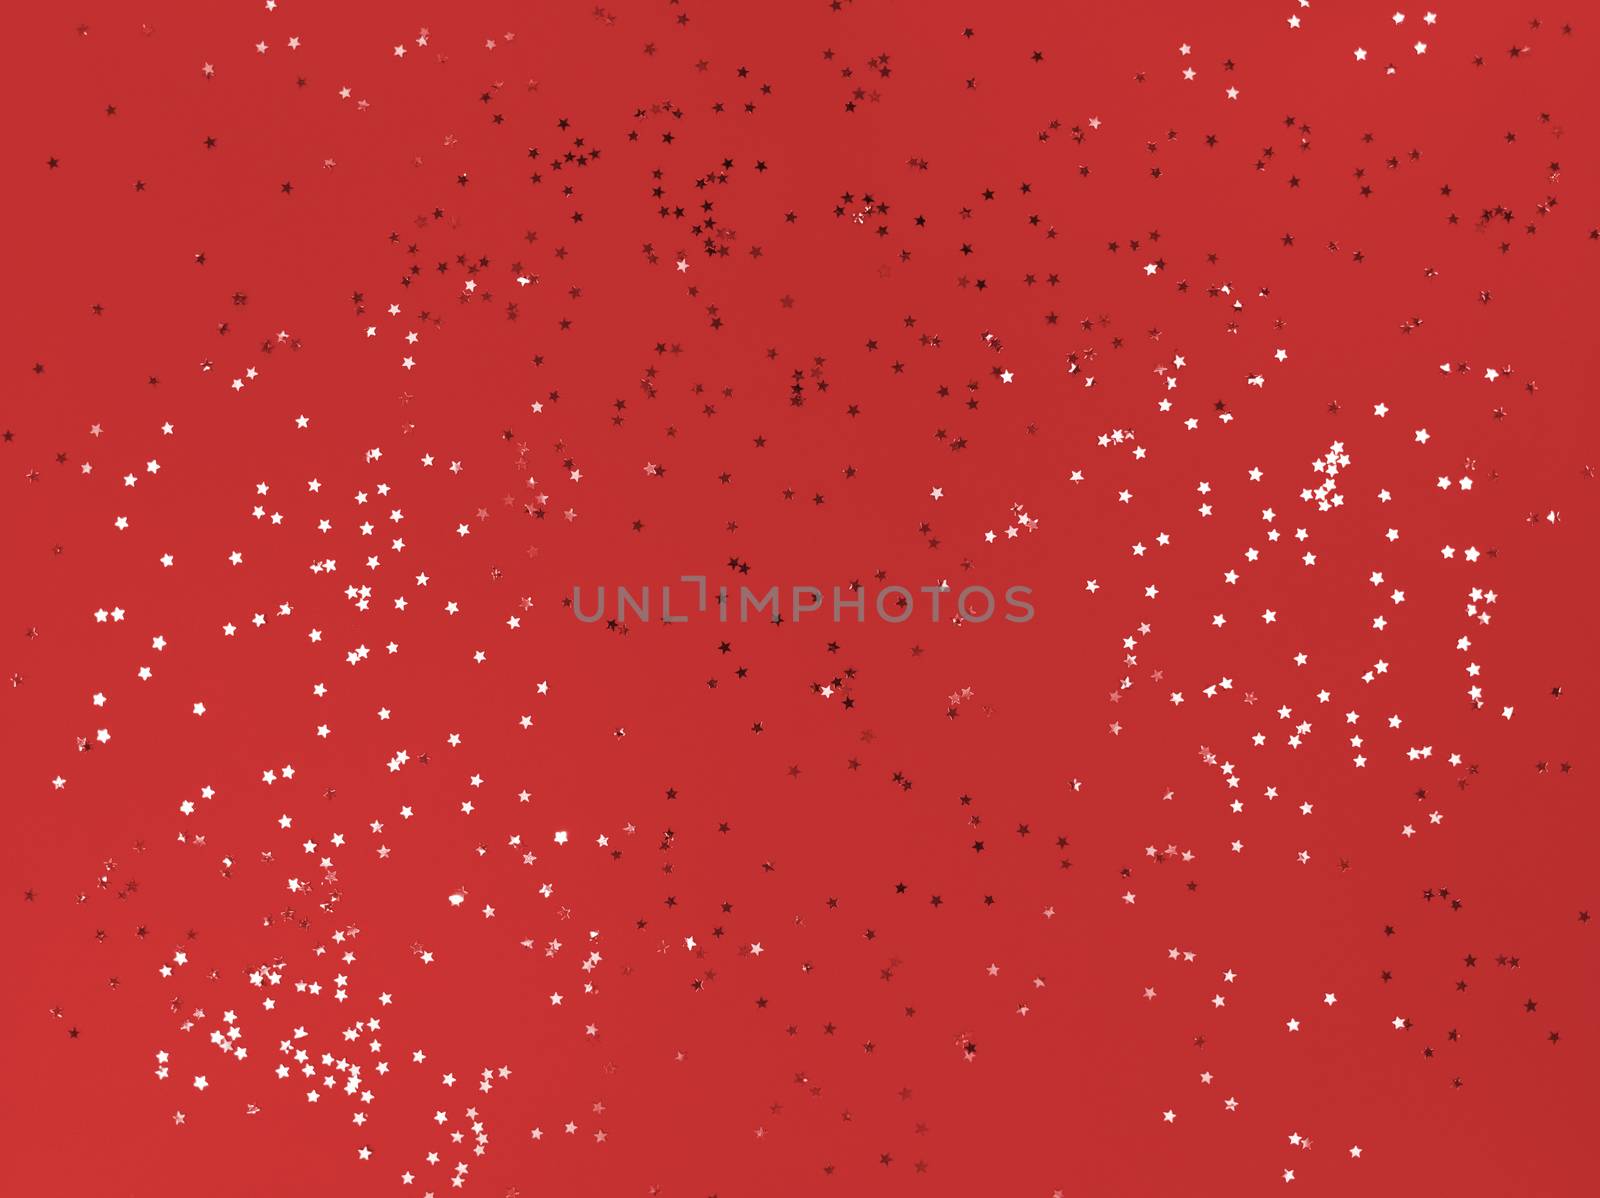 Confetti stars on red paper. Festive background.